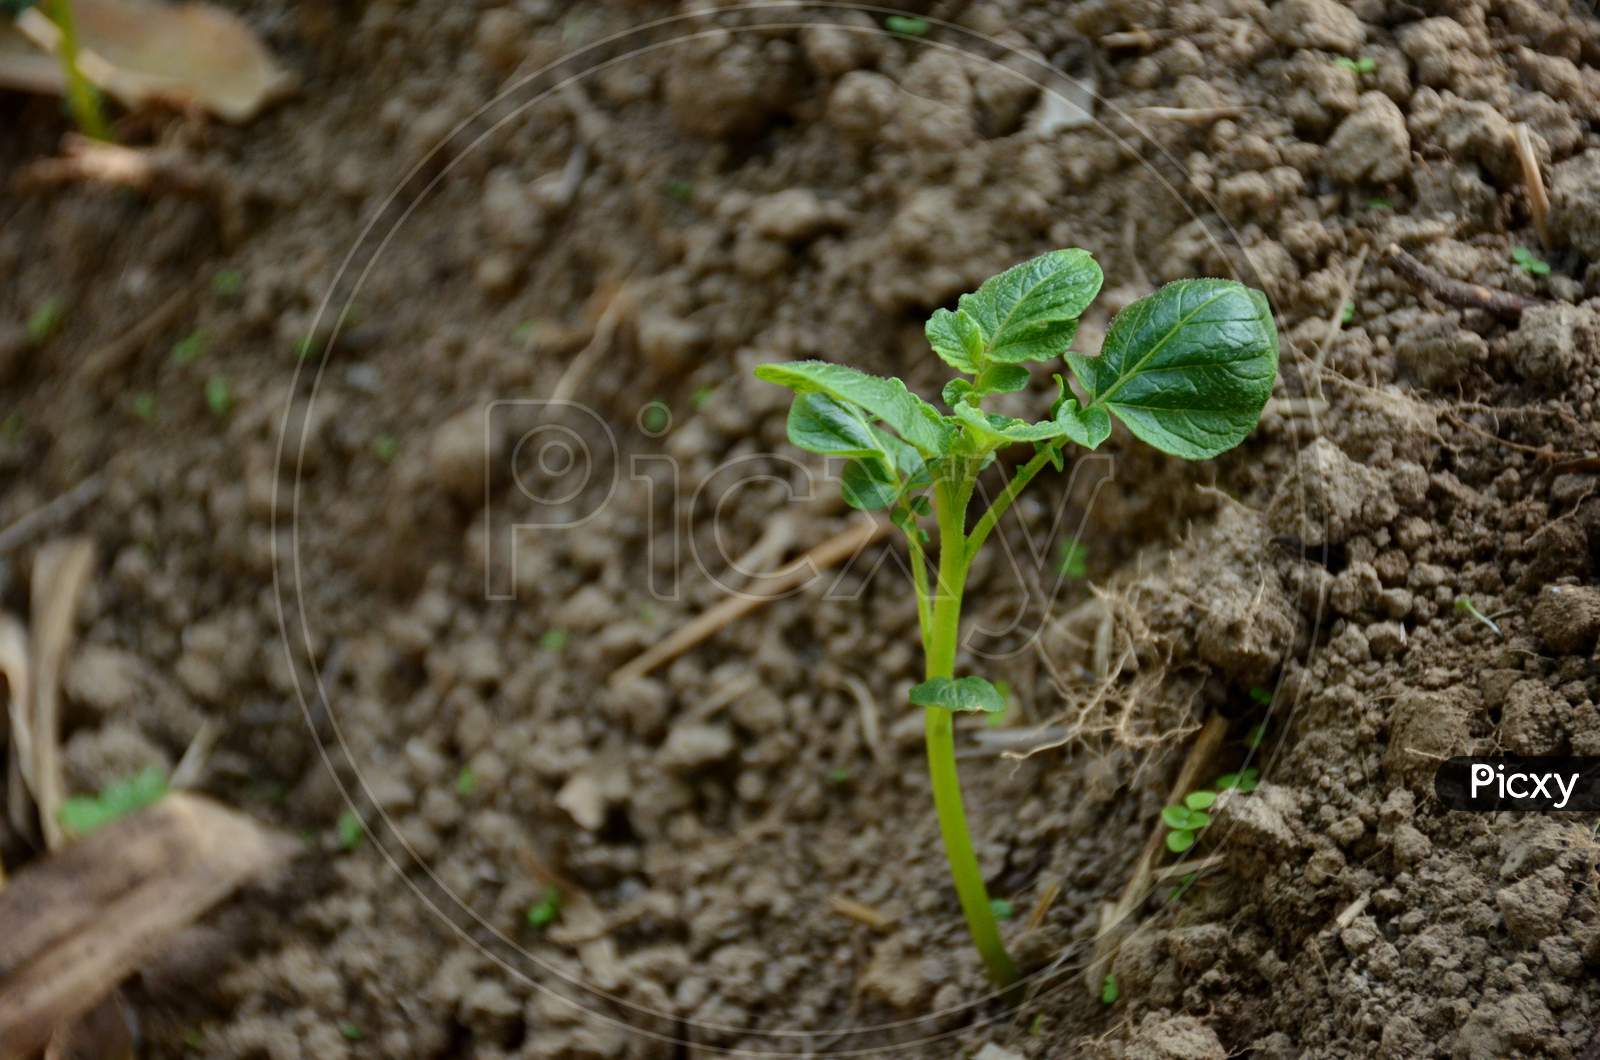 The Small Ripe Green Potato Plant Seedlings In The Garden.